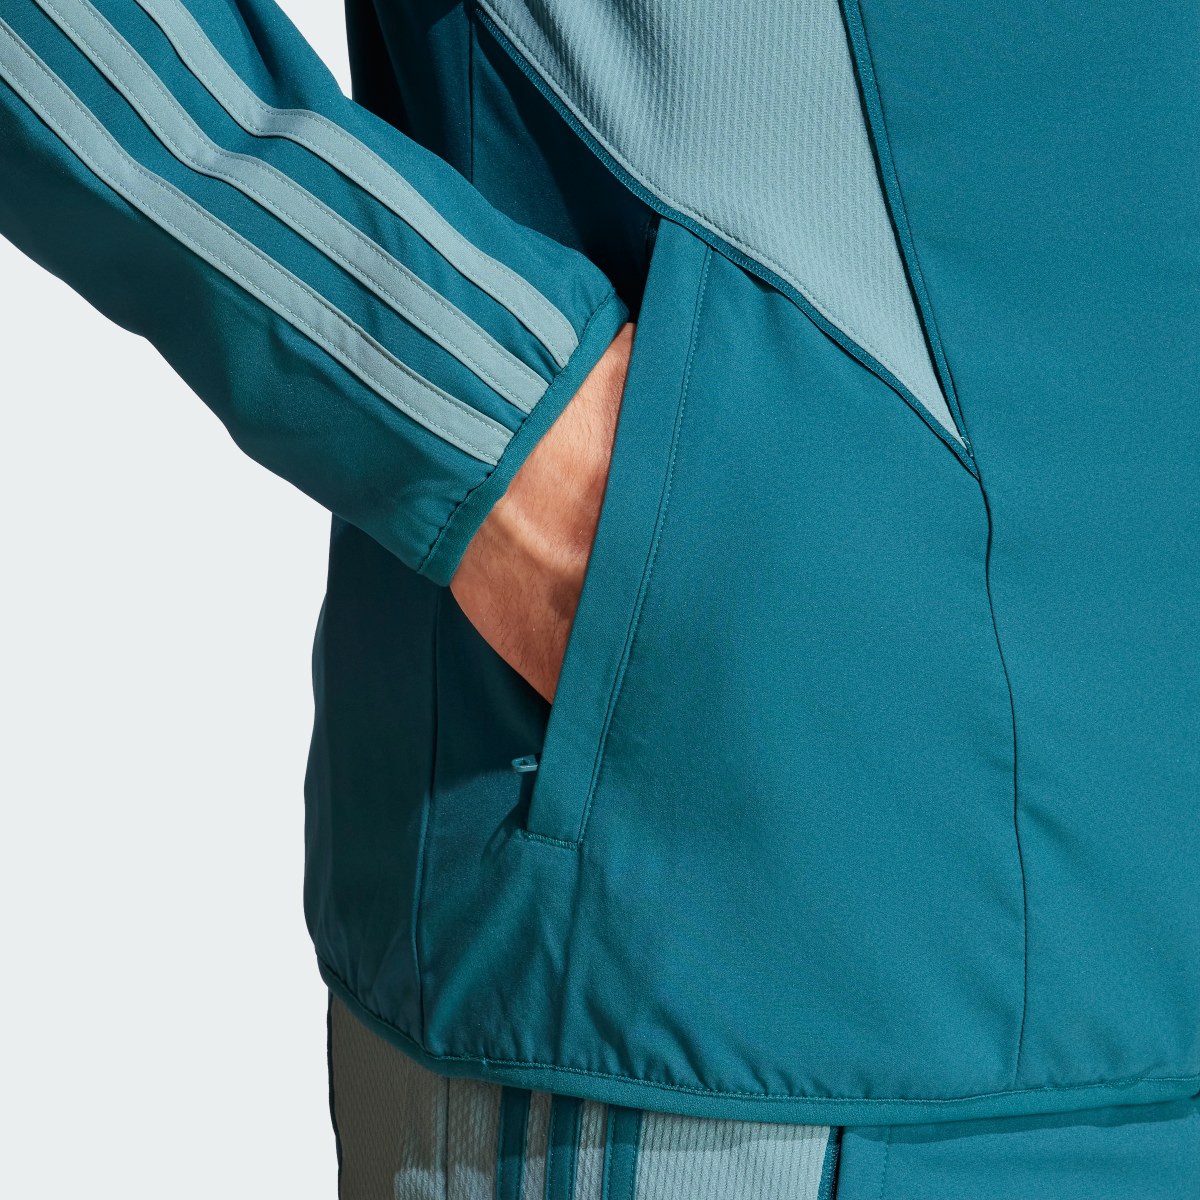 Adidas Arsenal Anthem Jacket. 10